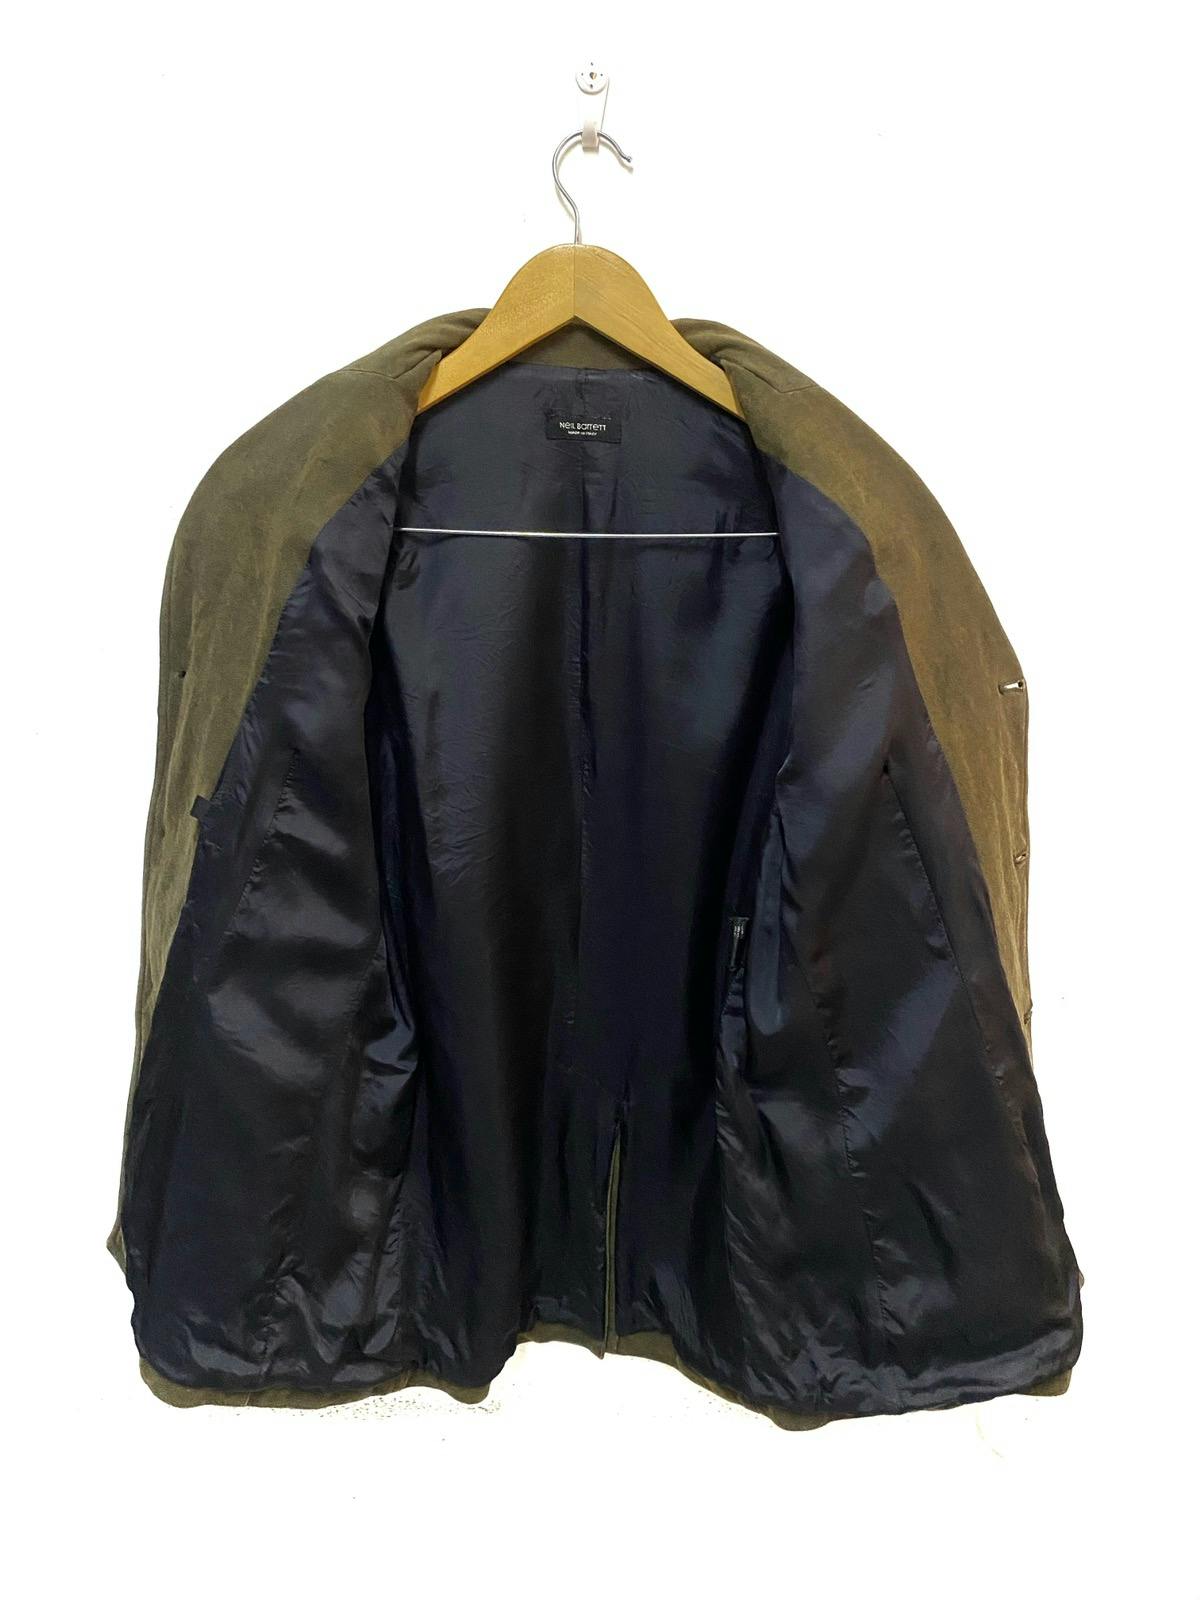 Neil Barrett Jacket Coat Blazer Made in Italy - 4